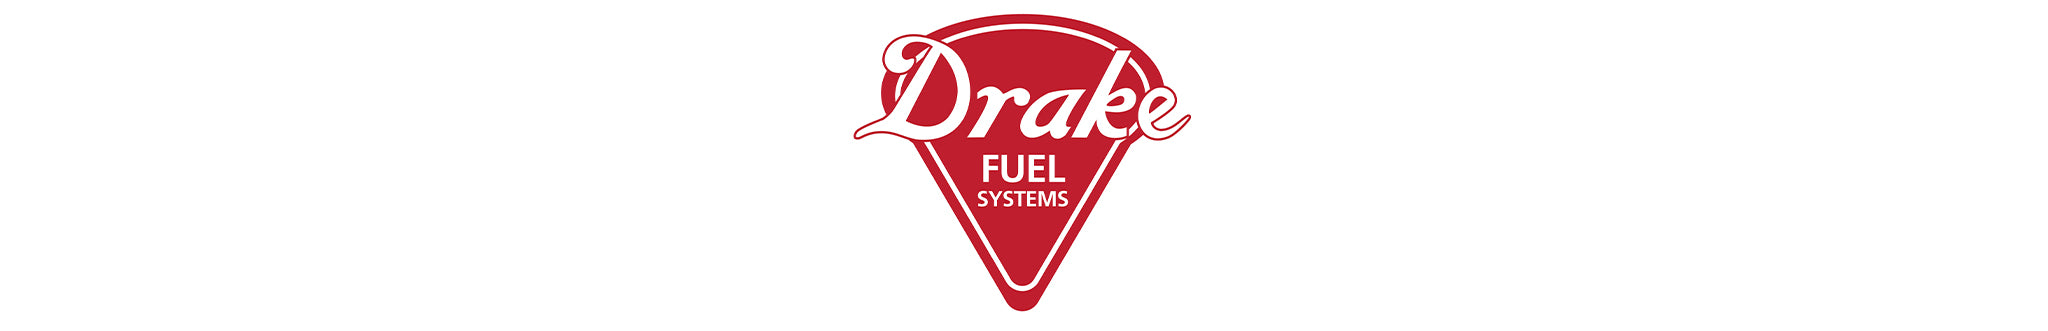 Fuel System – Bob Drake